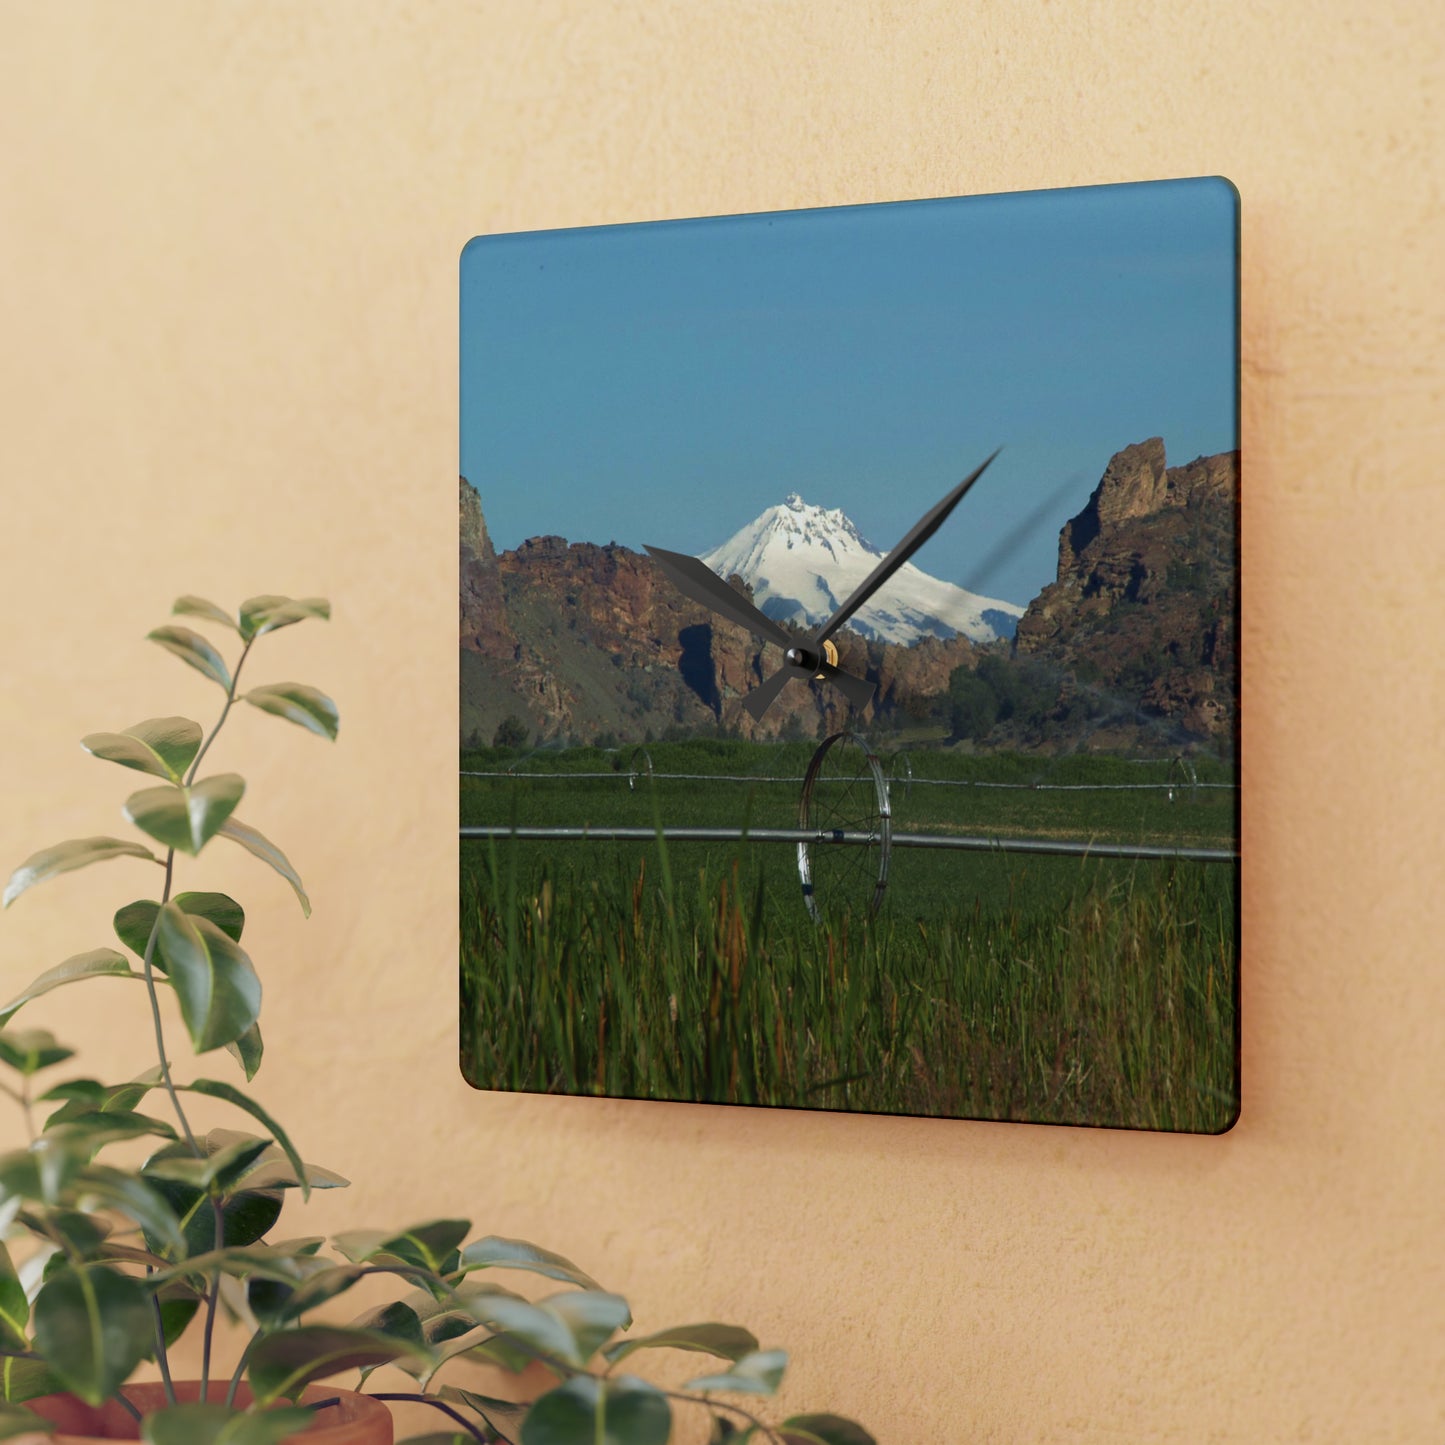 Mountain Field Acrylic Wall Clock